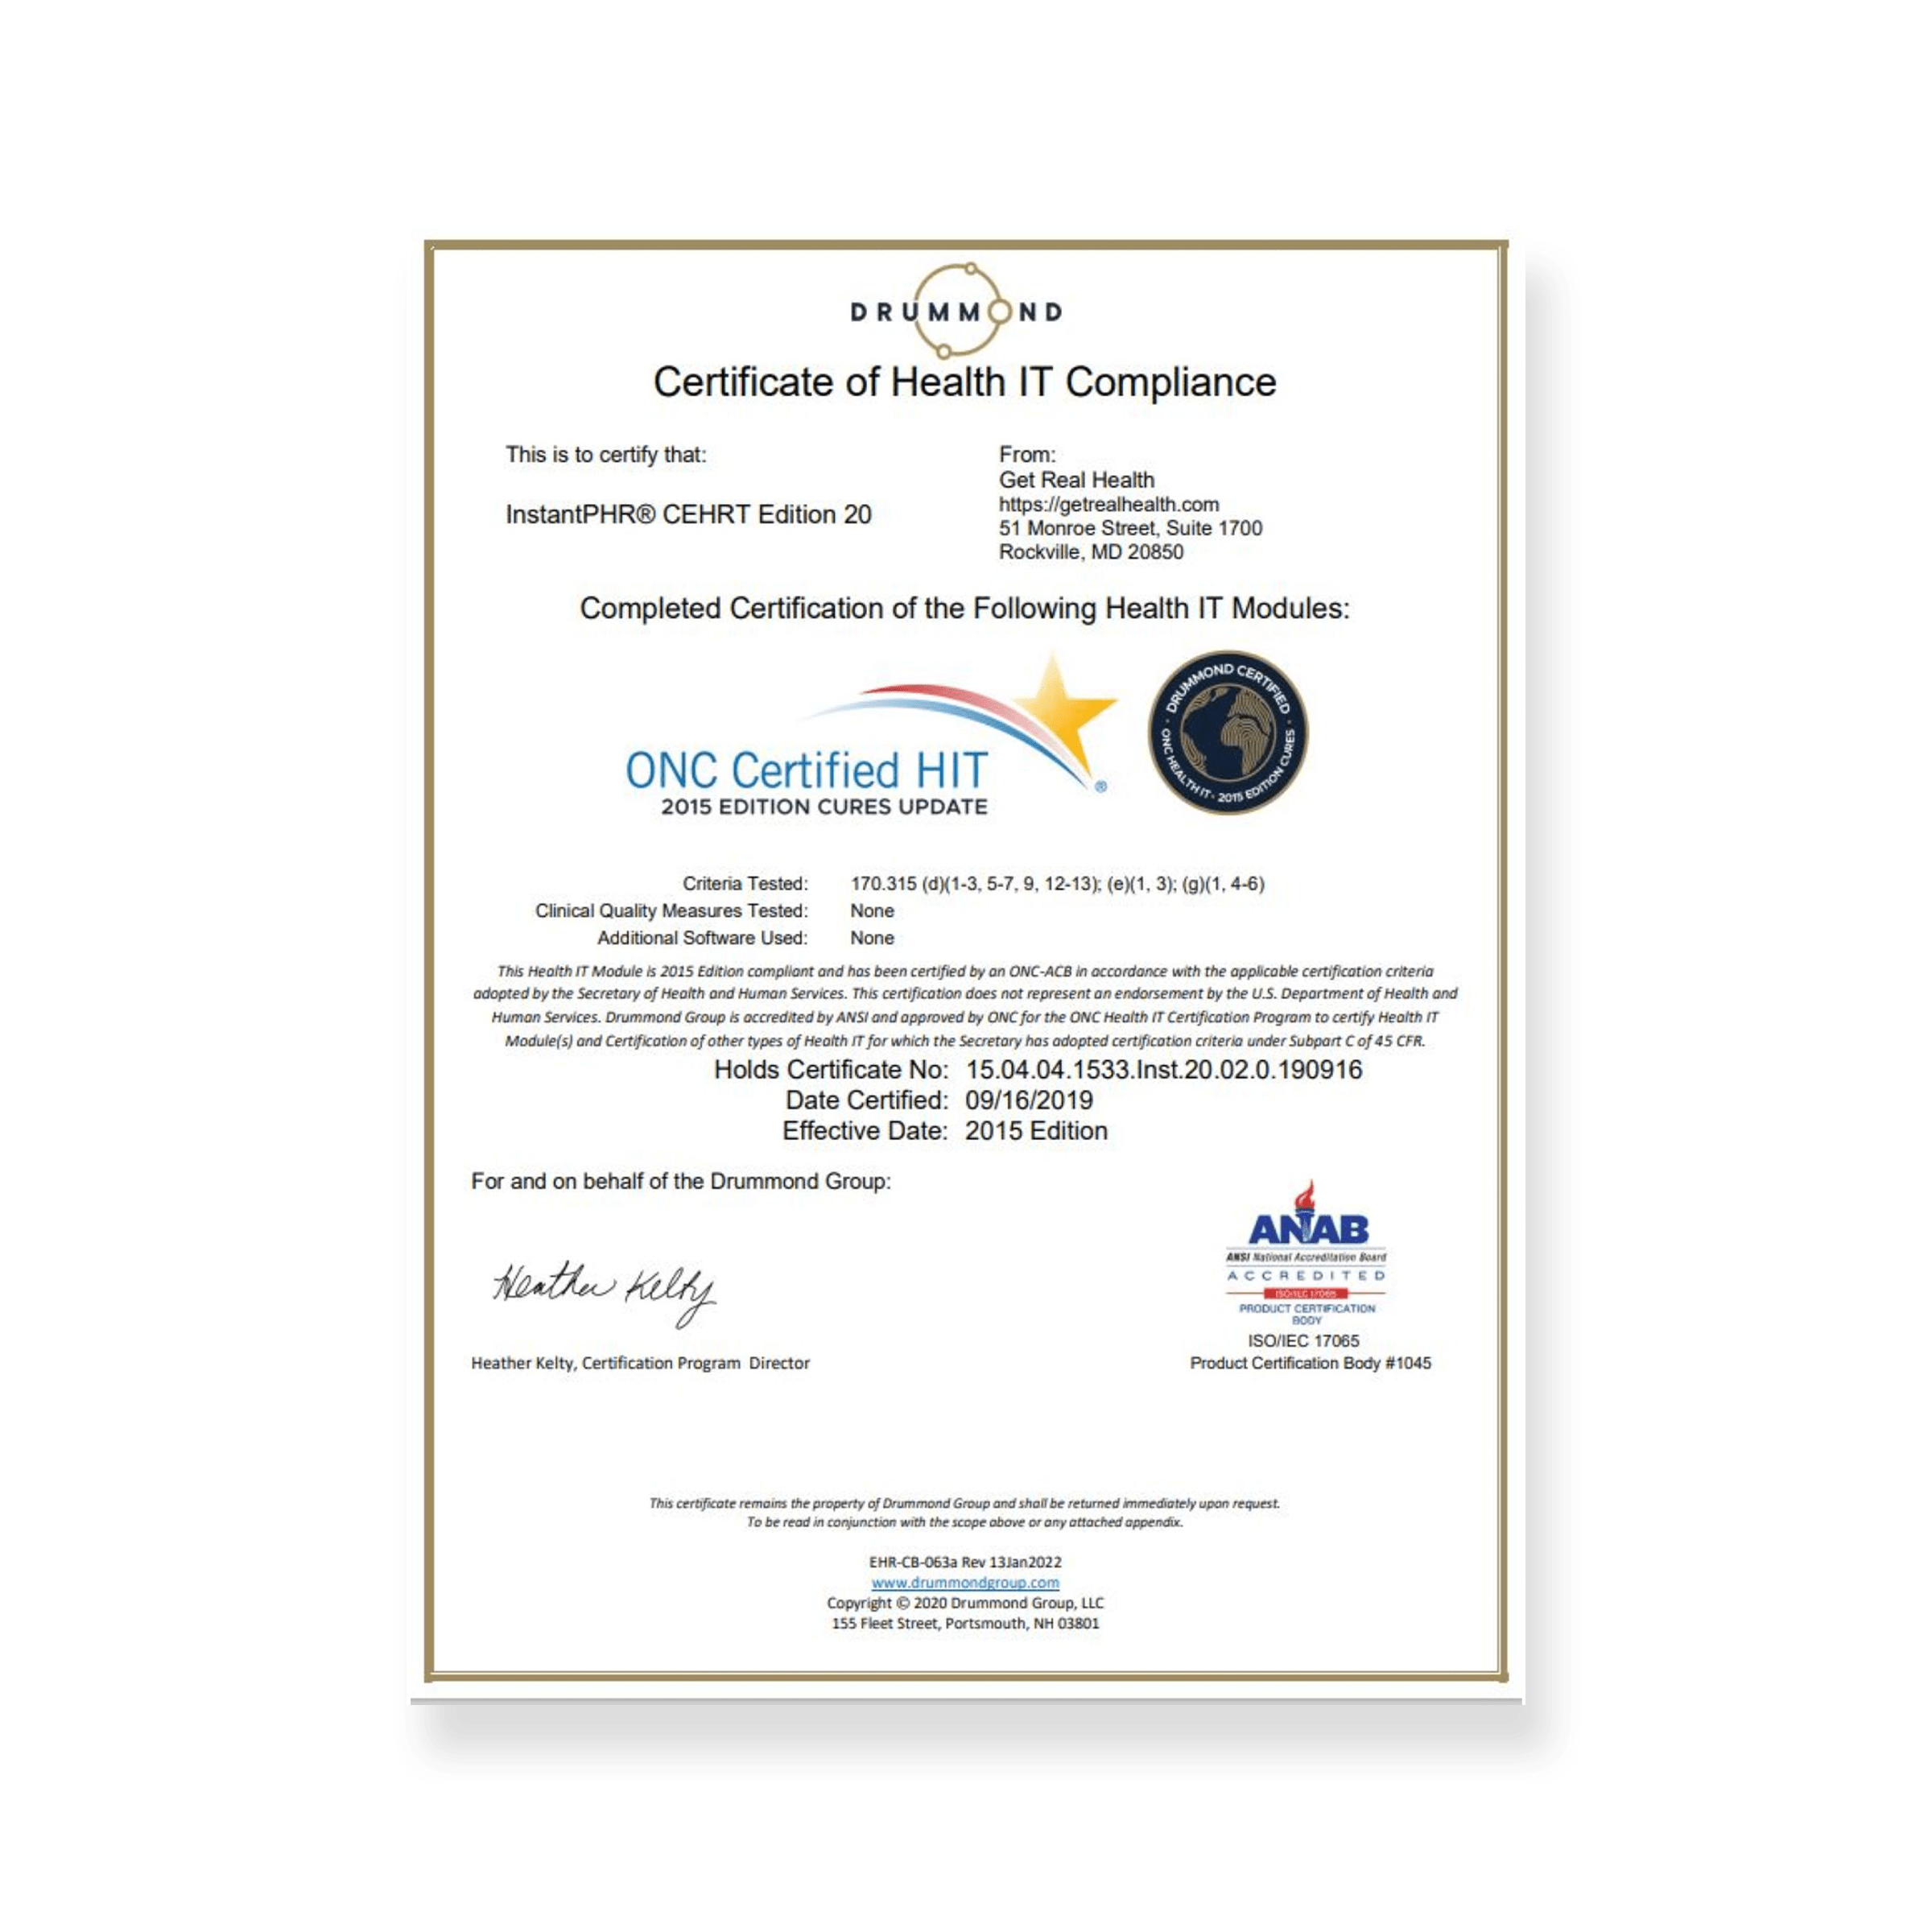 Certificate of Health IT Compliance